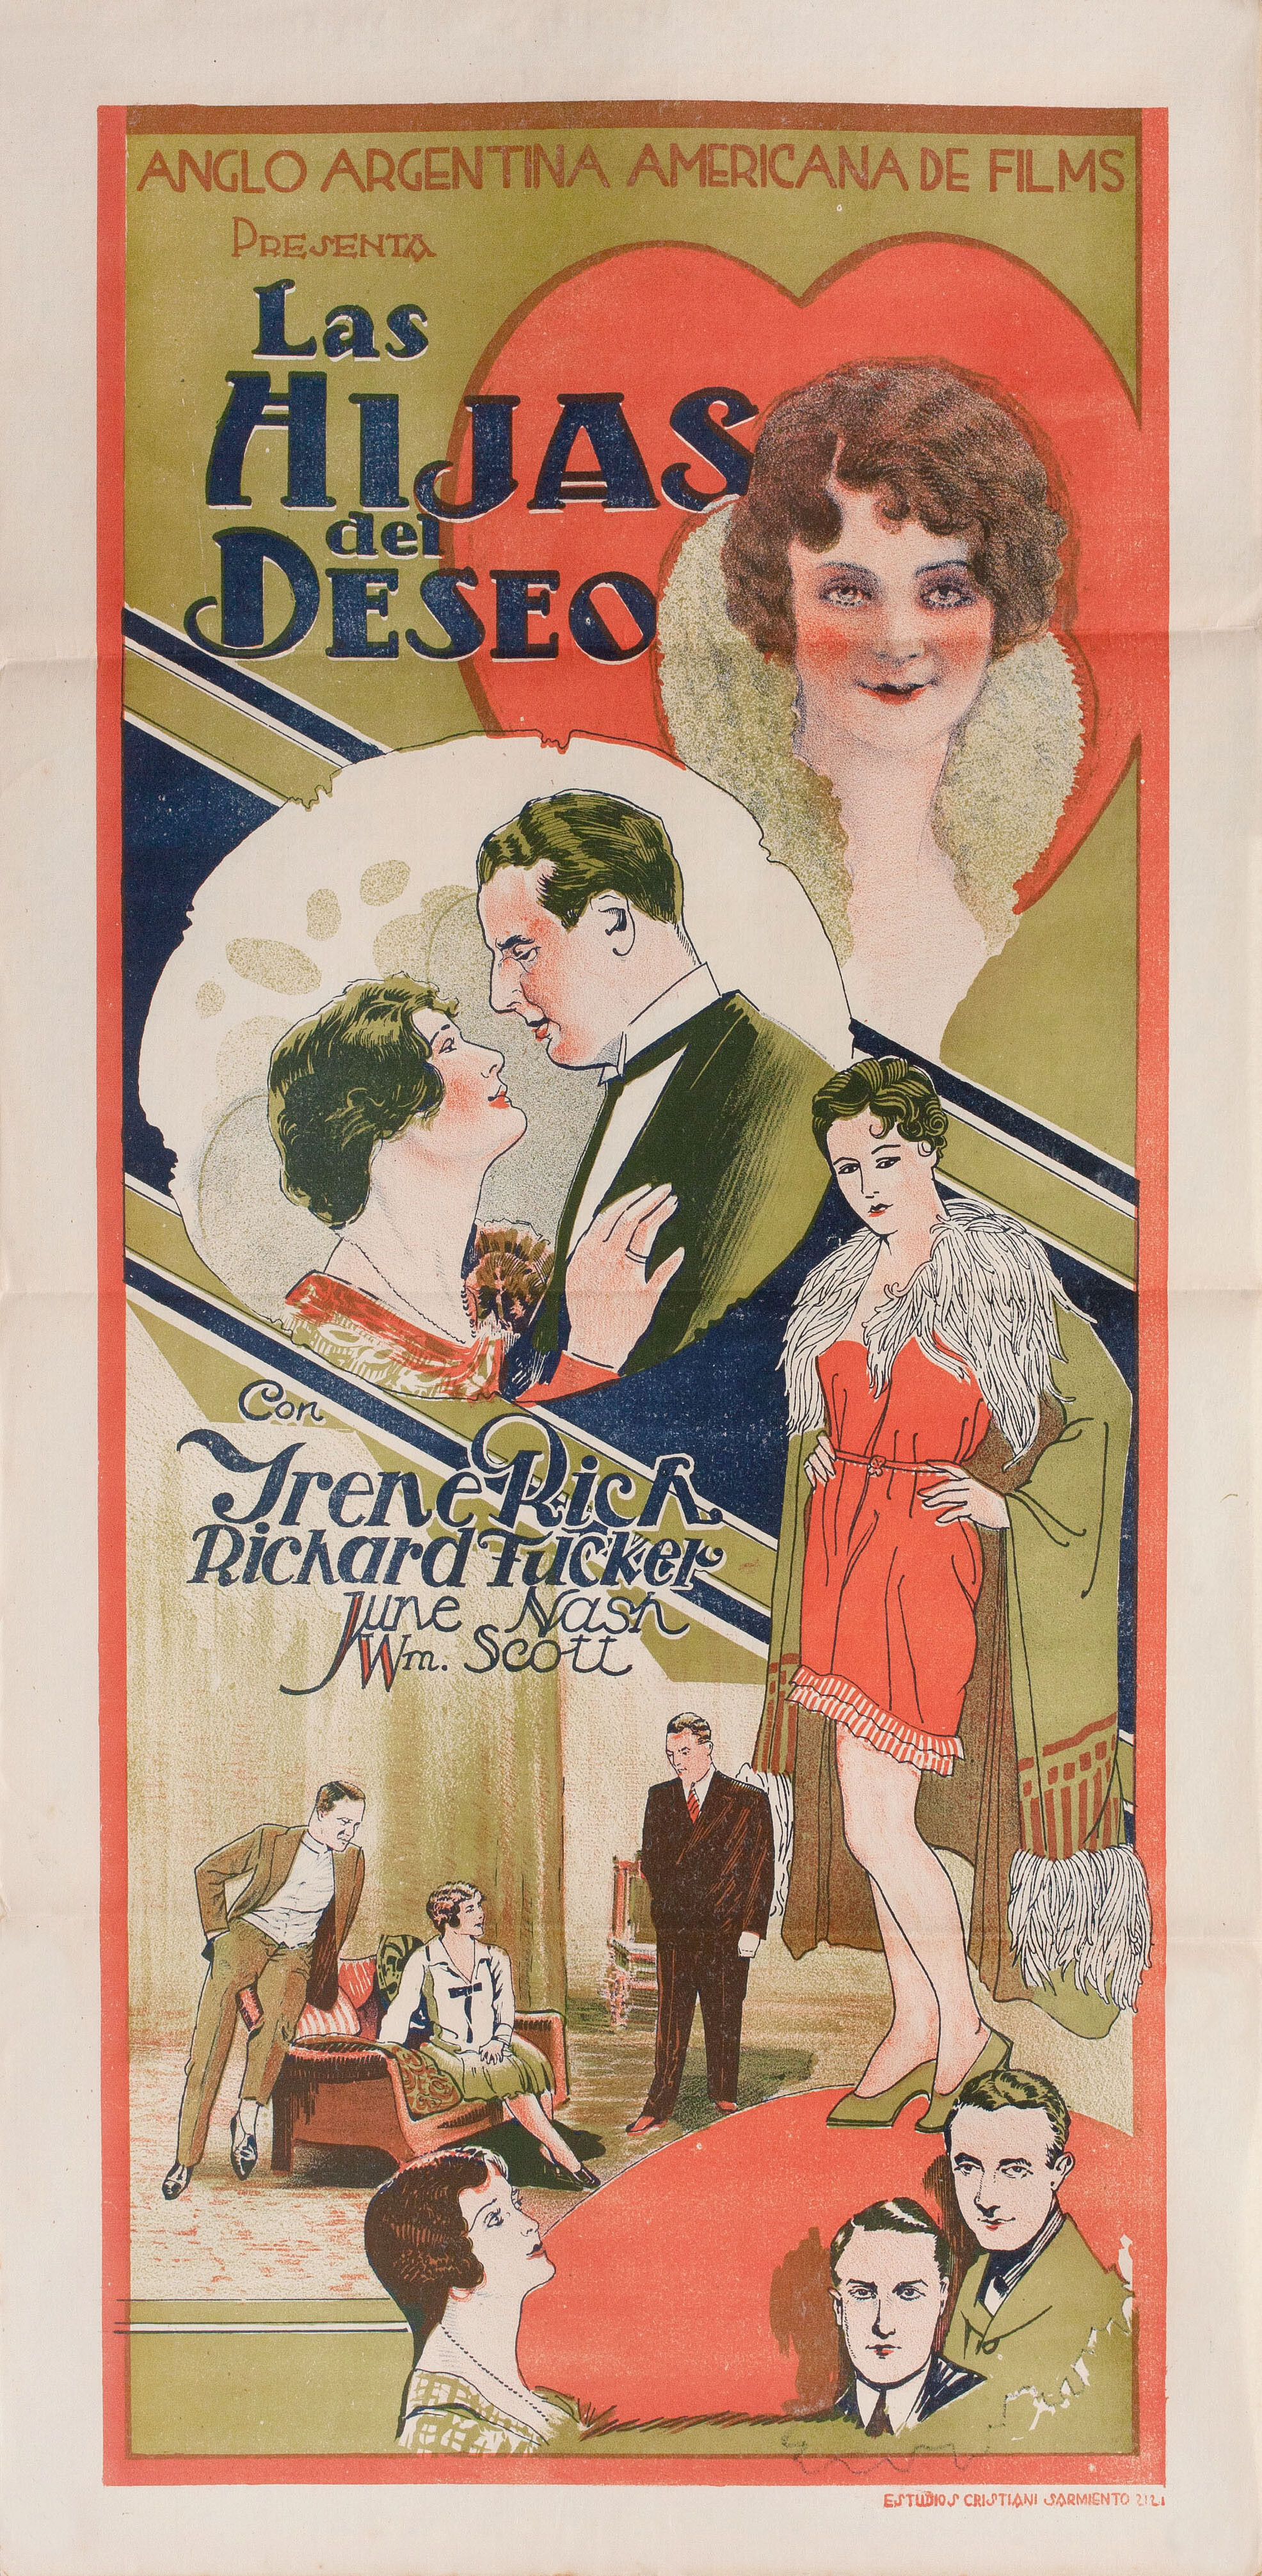 Дочери желания (Daughters of Desire, 1929), режиссёр Бертон Л. Кинг, постер к фильму в стиле ар-деко (Аргентина, 1929 год)